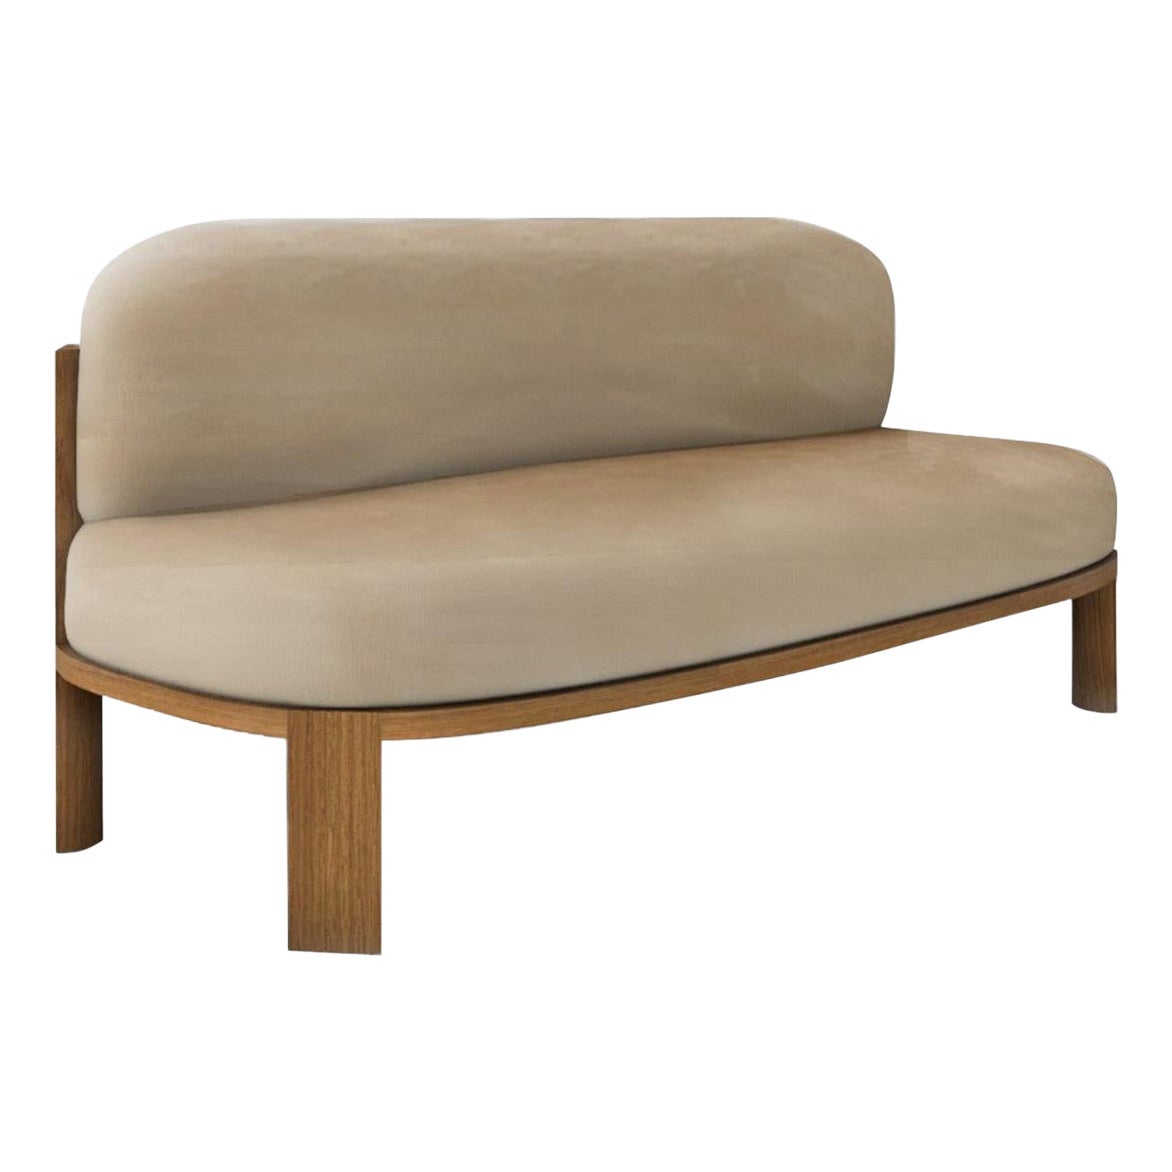 Unique Oak Sofa by Collector For Sale